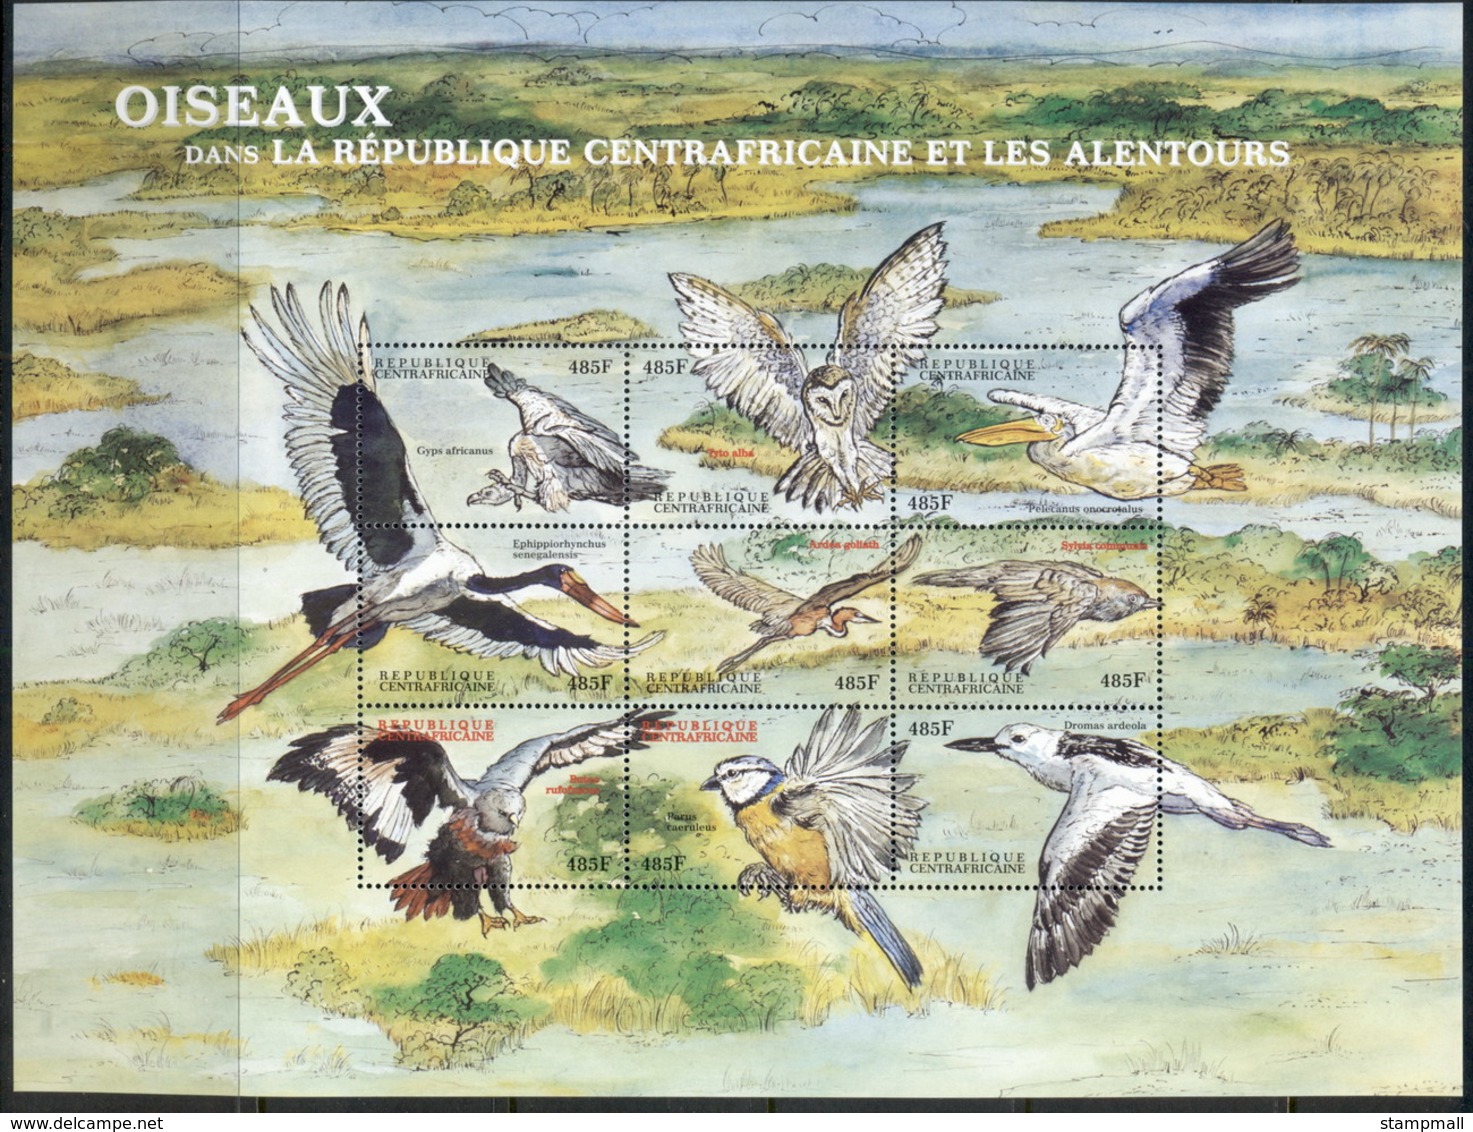 Central African Republic 2000 Birds, Sheetlet 485f MUH - Central African Republic